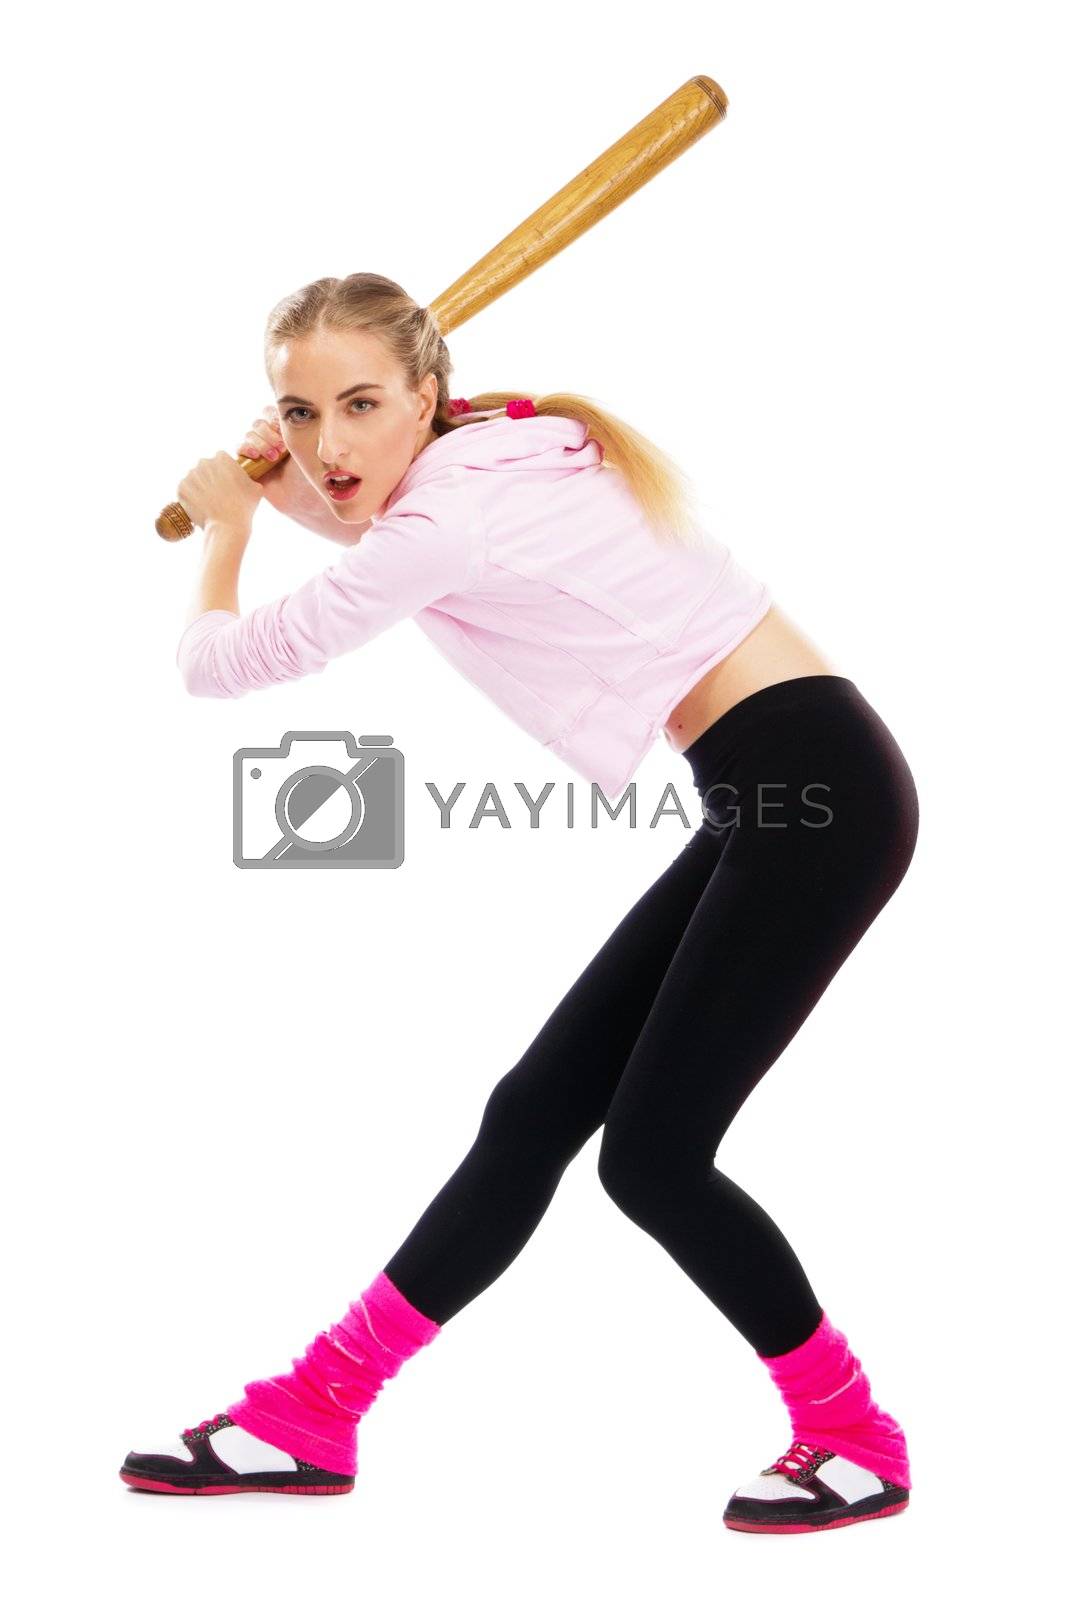 Royalty free image of Pretty lady with a baseball bat by Gdolgikh